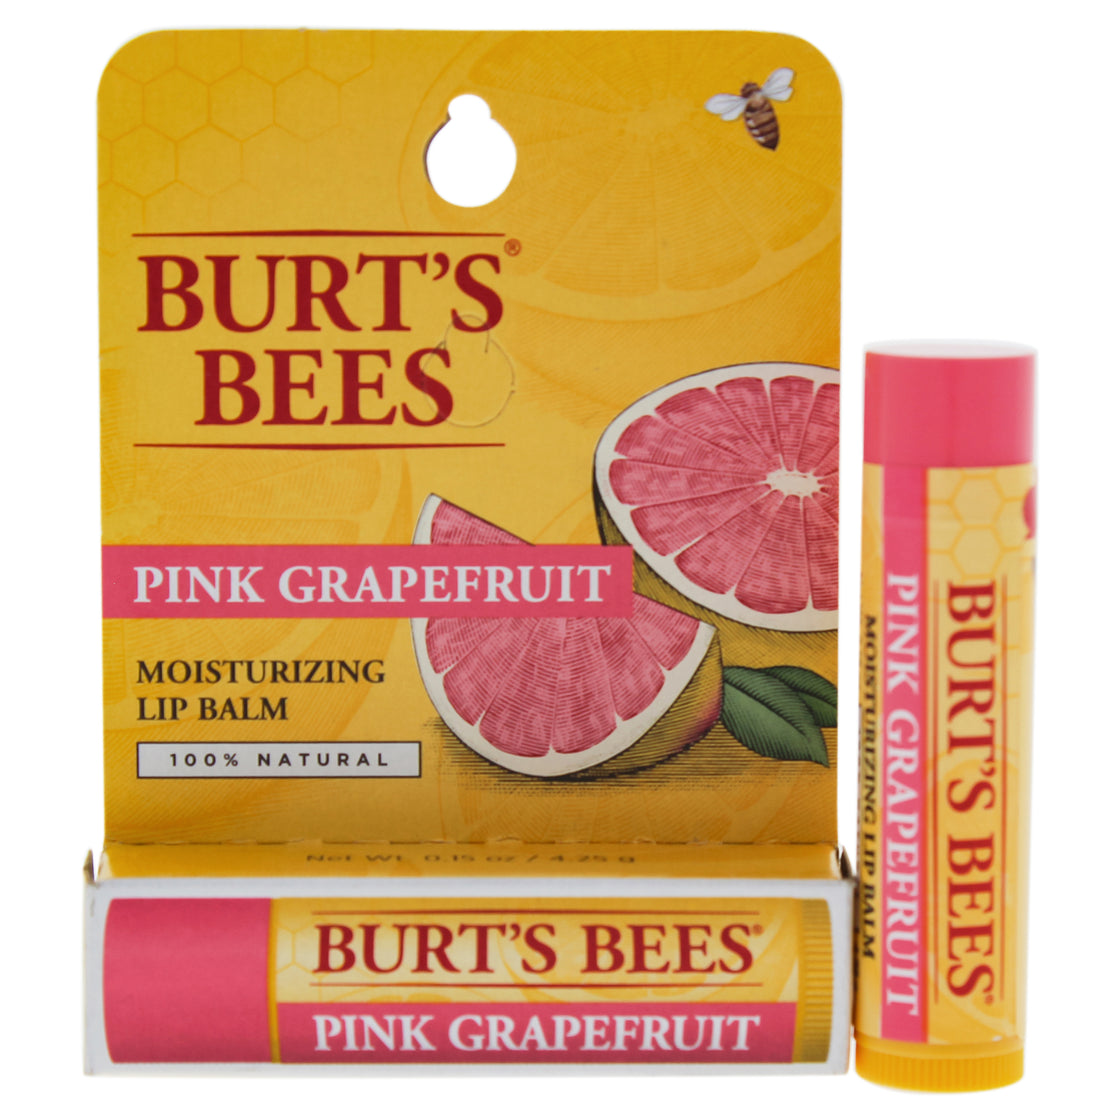 Pink Grapefruit Moisturizing Lip Balm Blister by Burts Bees for Unisex - 0.15 oz Lip Balm